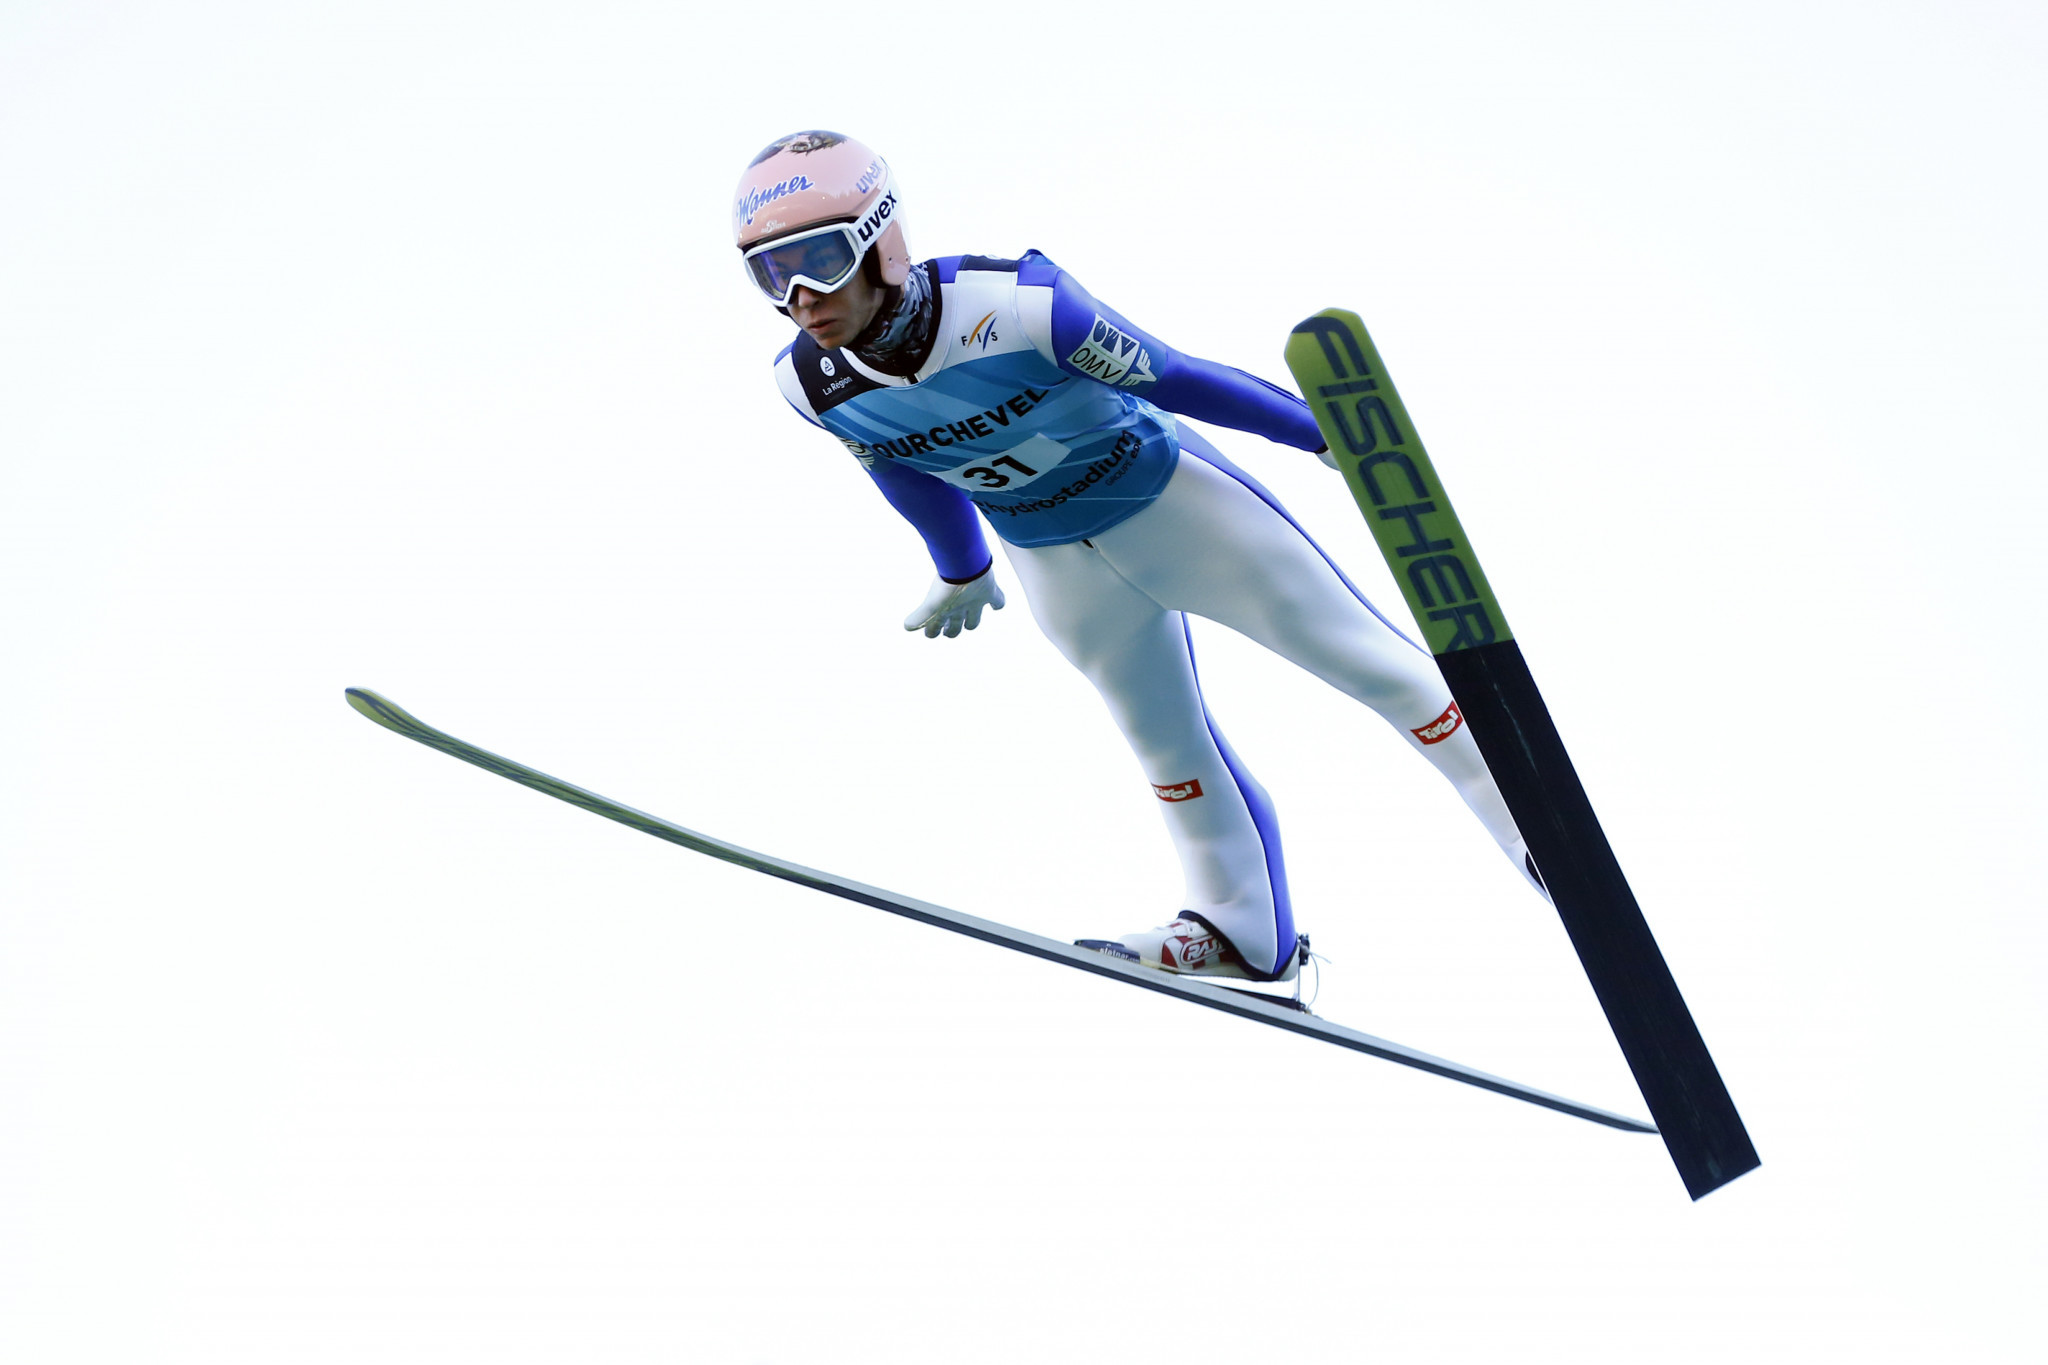 Defending champion Kraft tops qualification as FIS Ski Jumping World Cup season begins